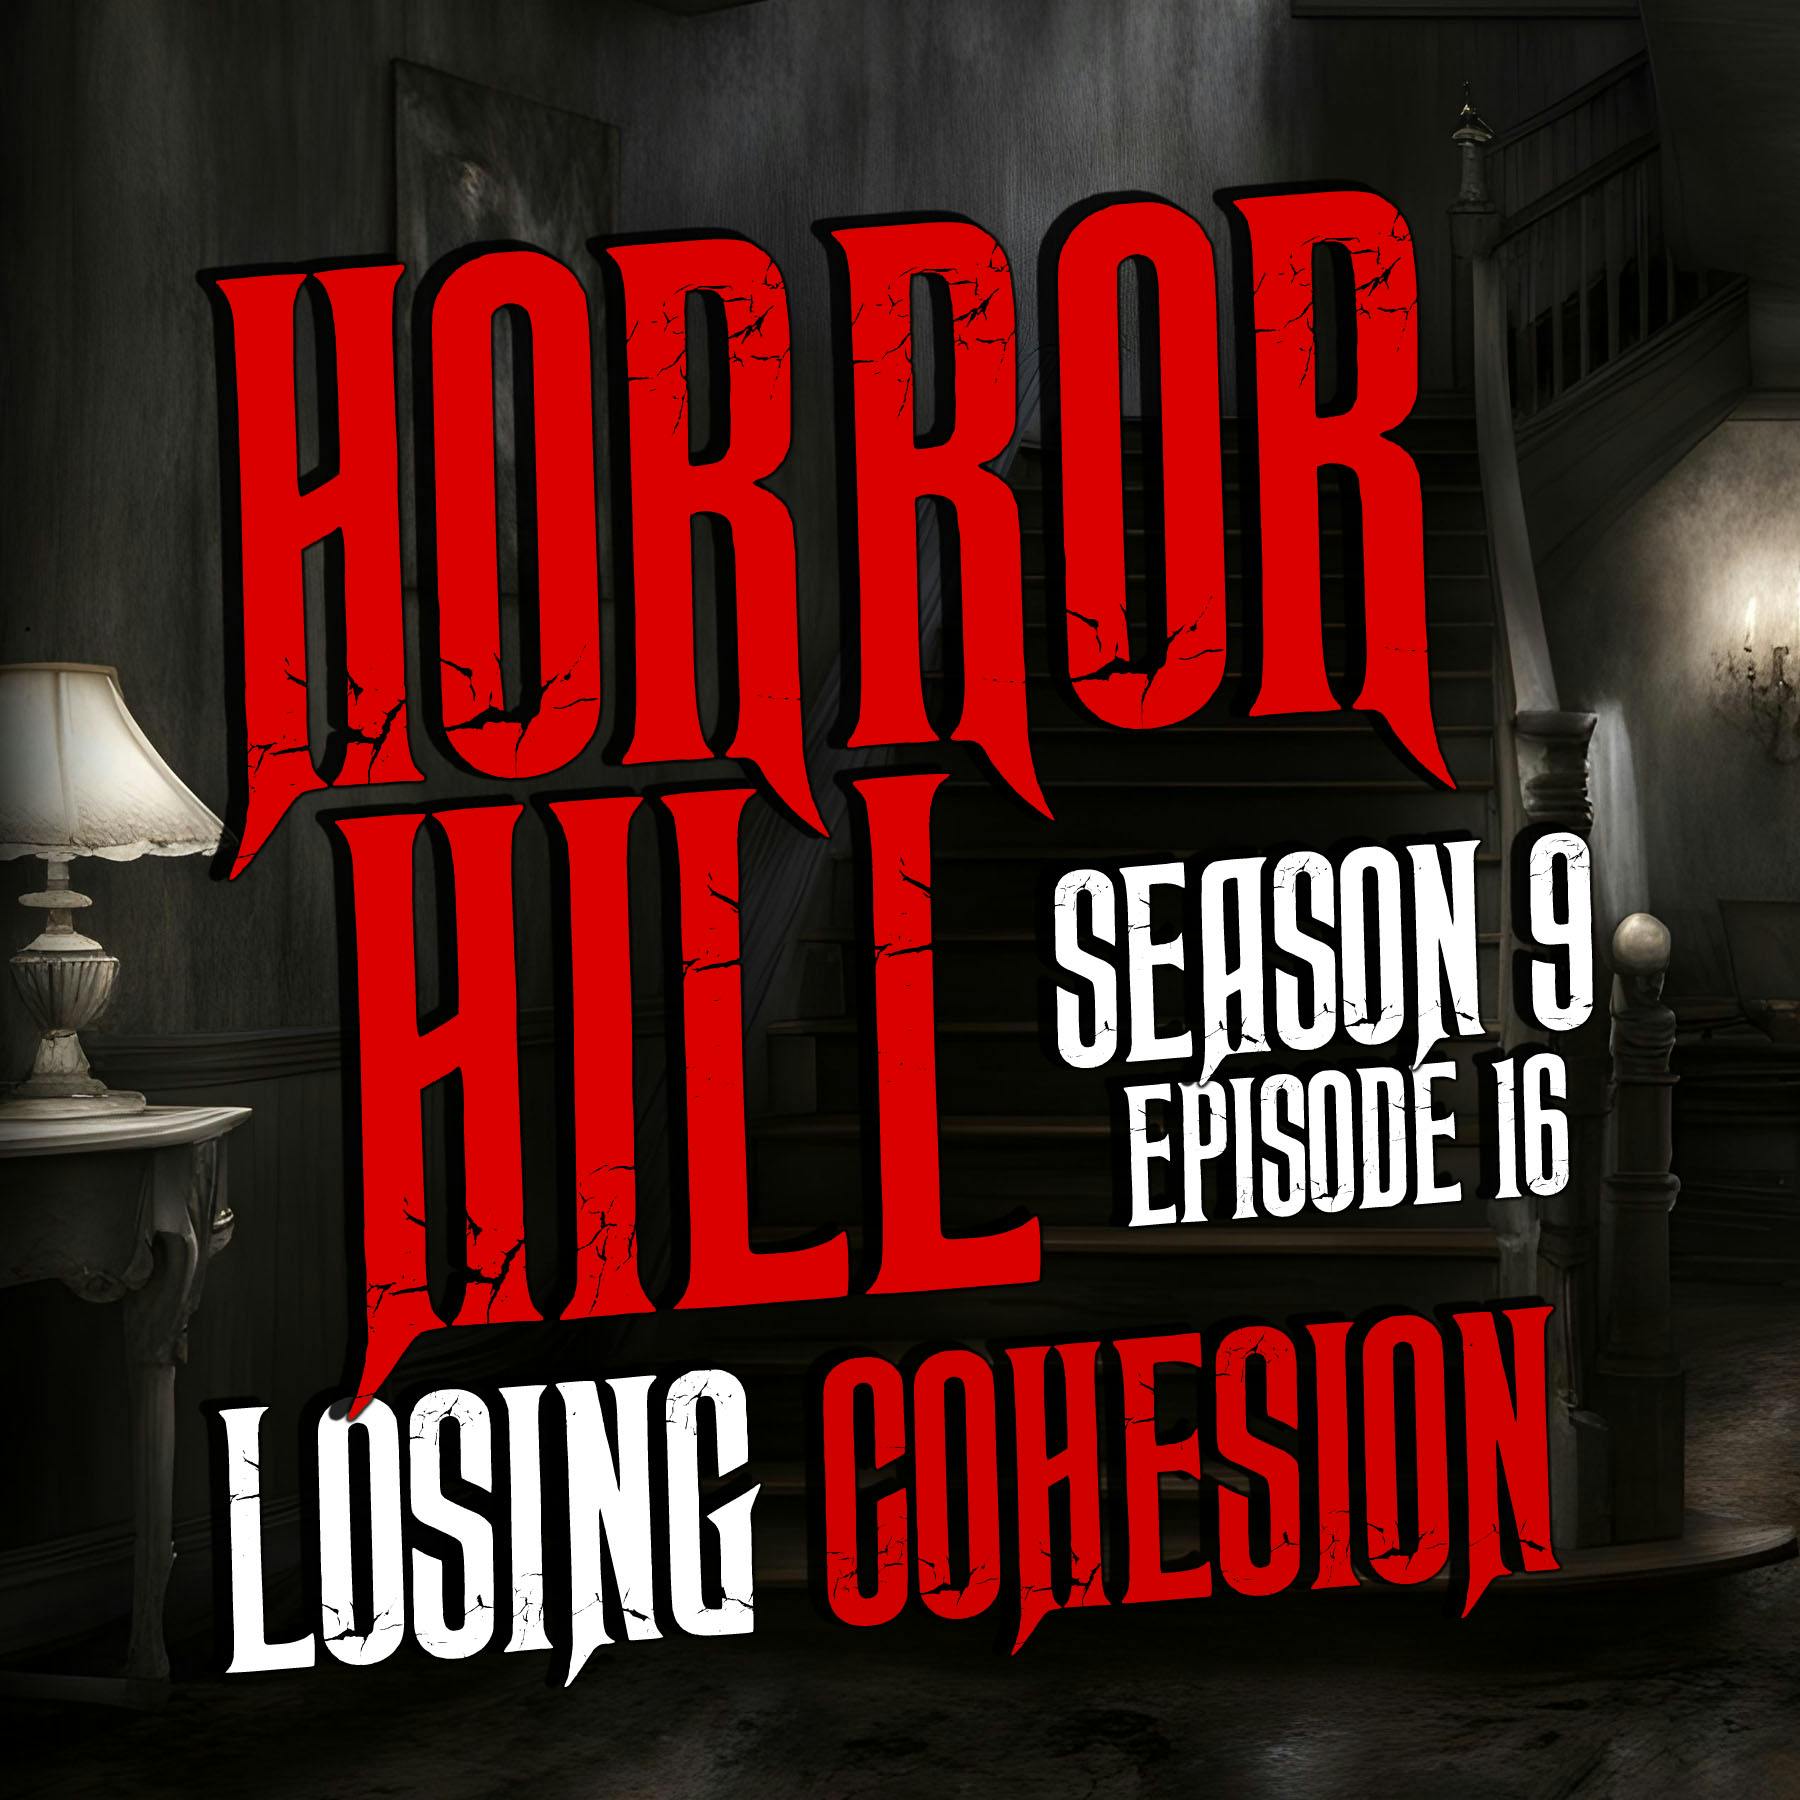 S9E16 - “Losing Cohesion" - Horror Hill